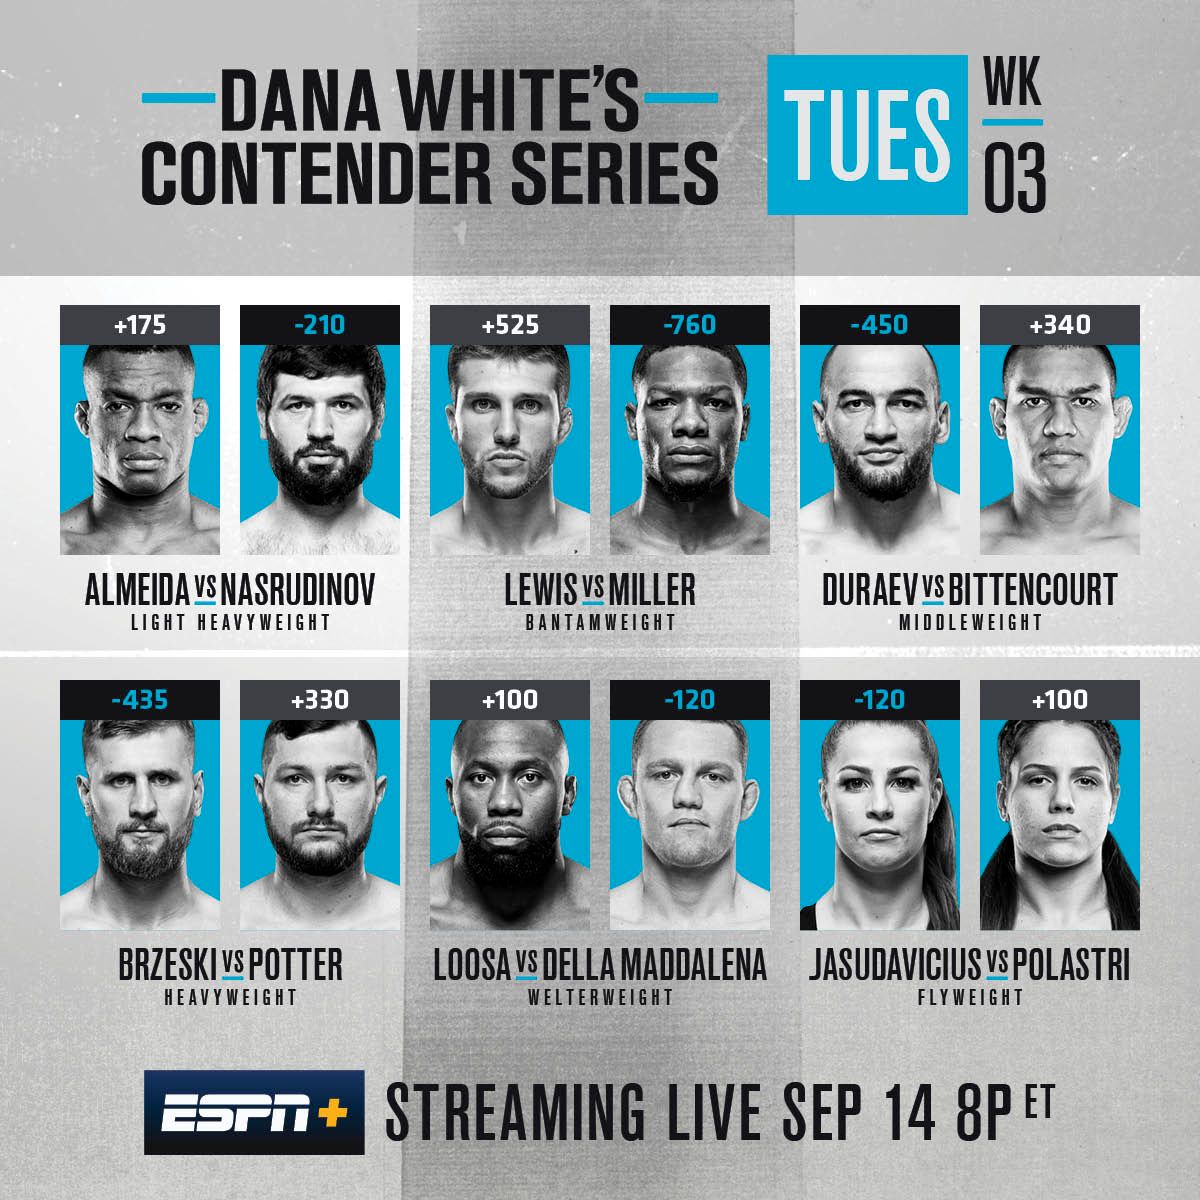 dana whites contender series